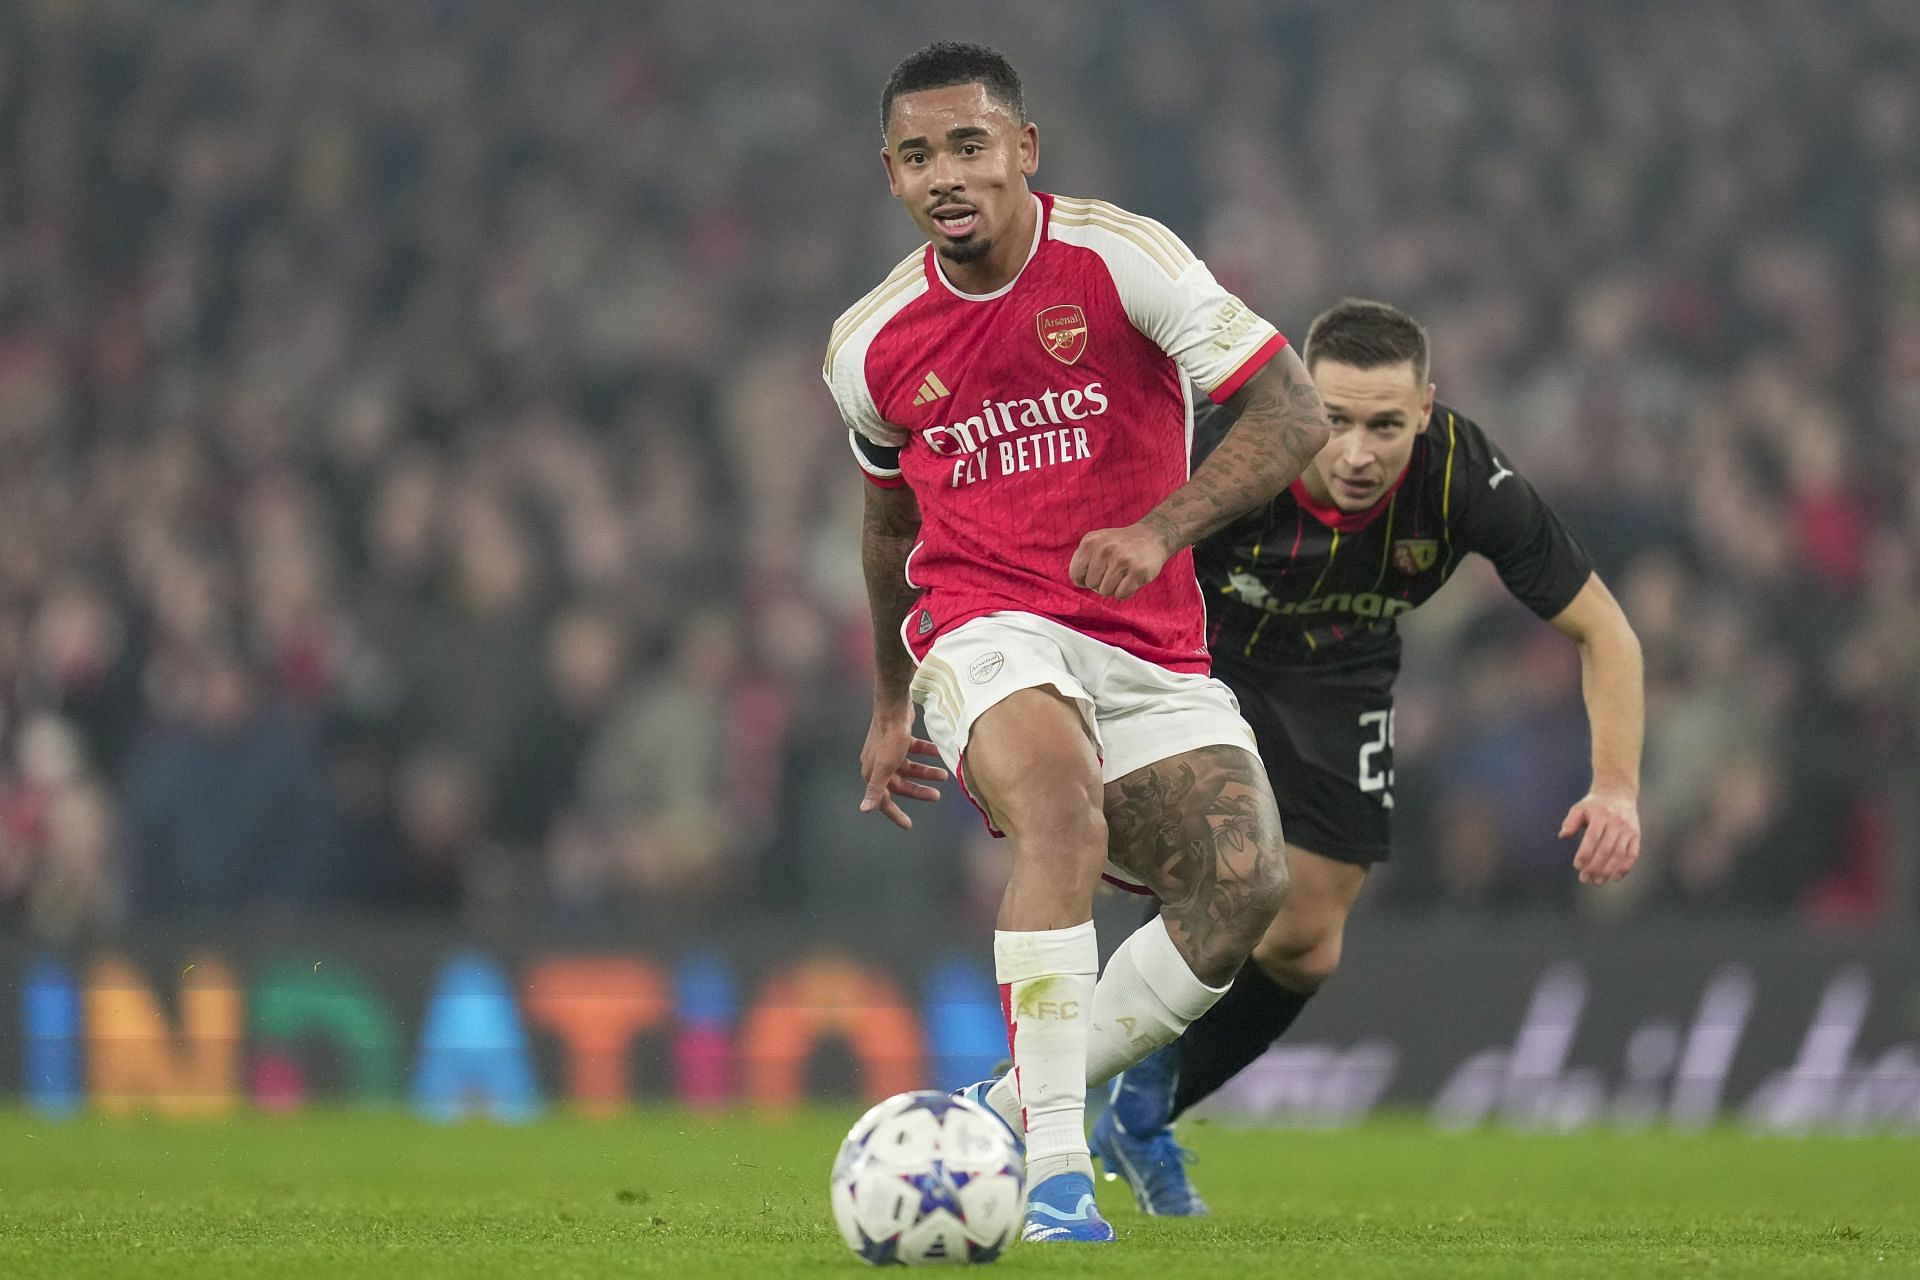 Arsenal attacker Gabriel Jesus